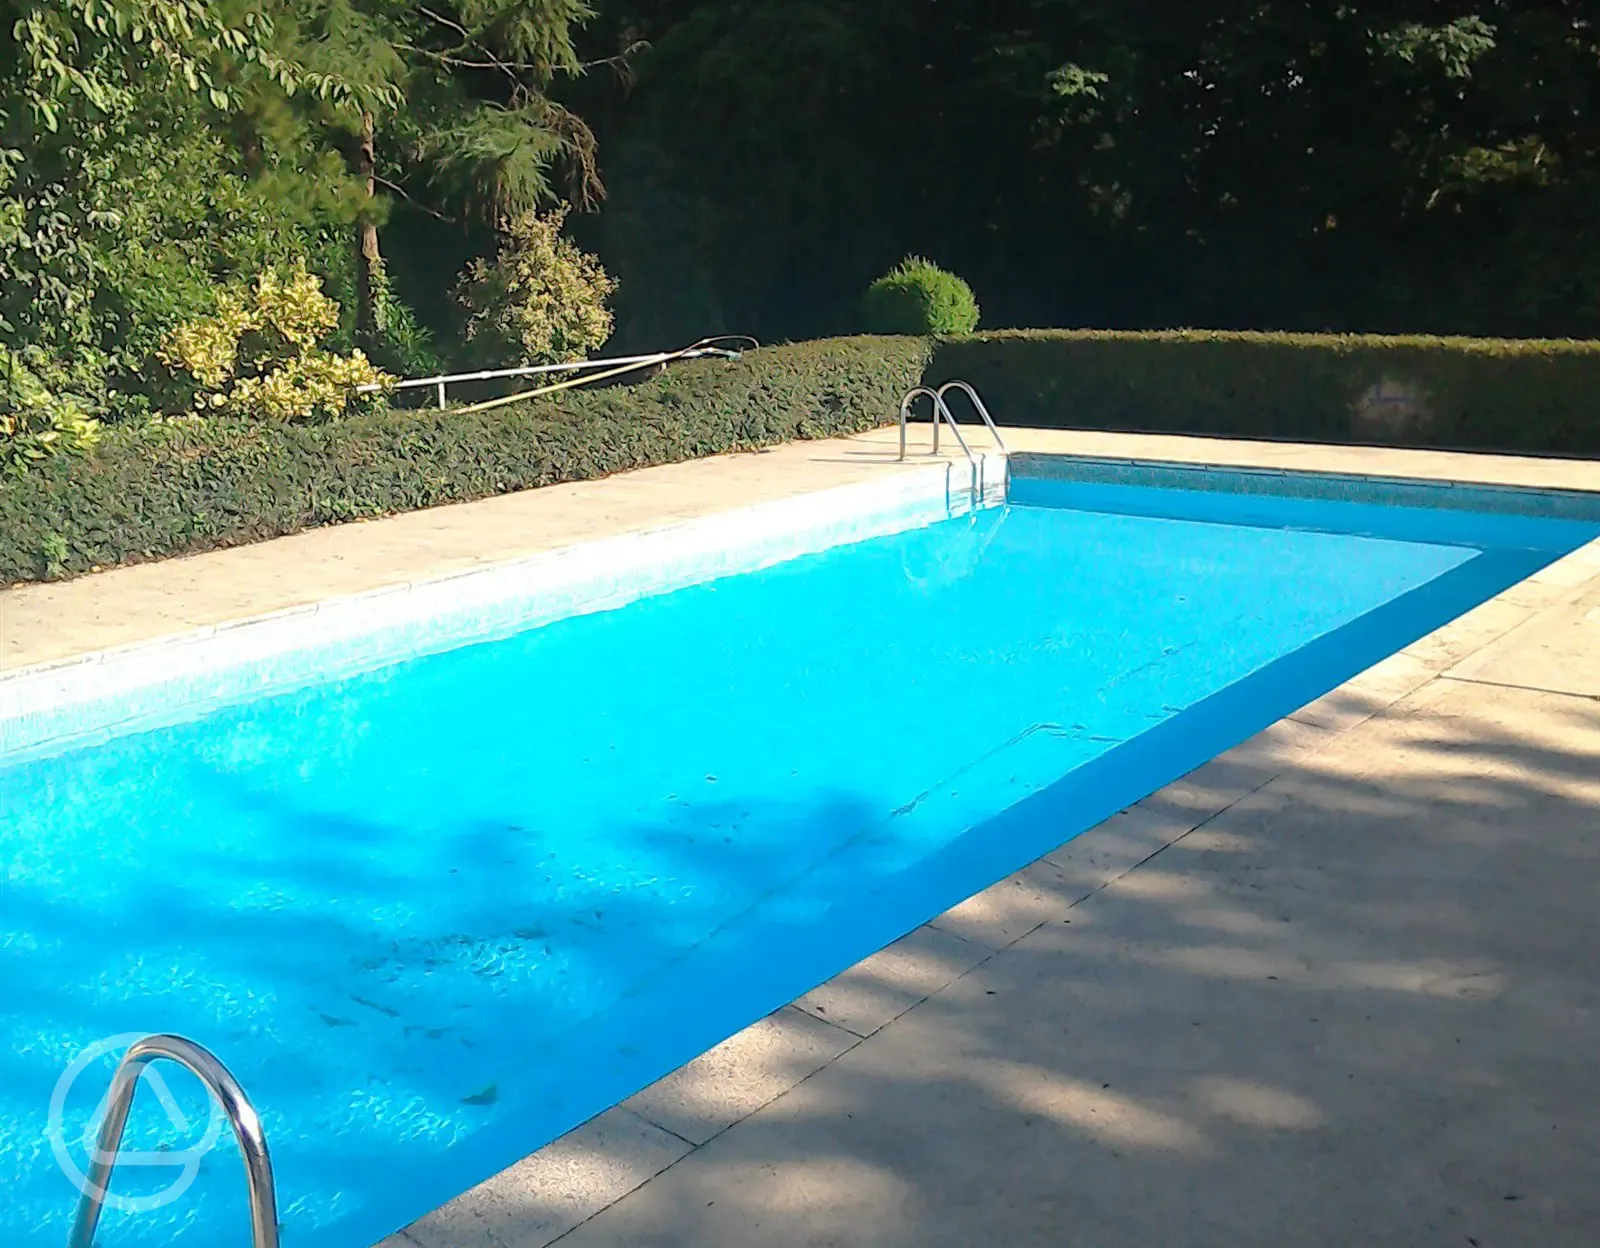 Lanarth swimming pool